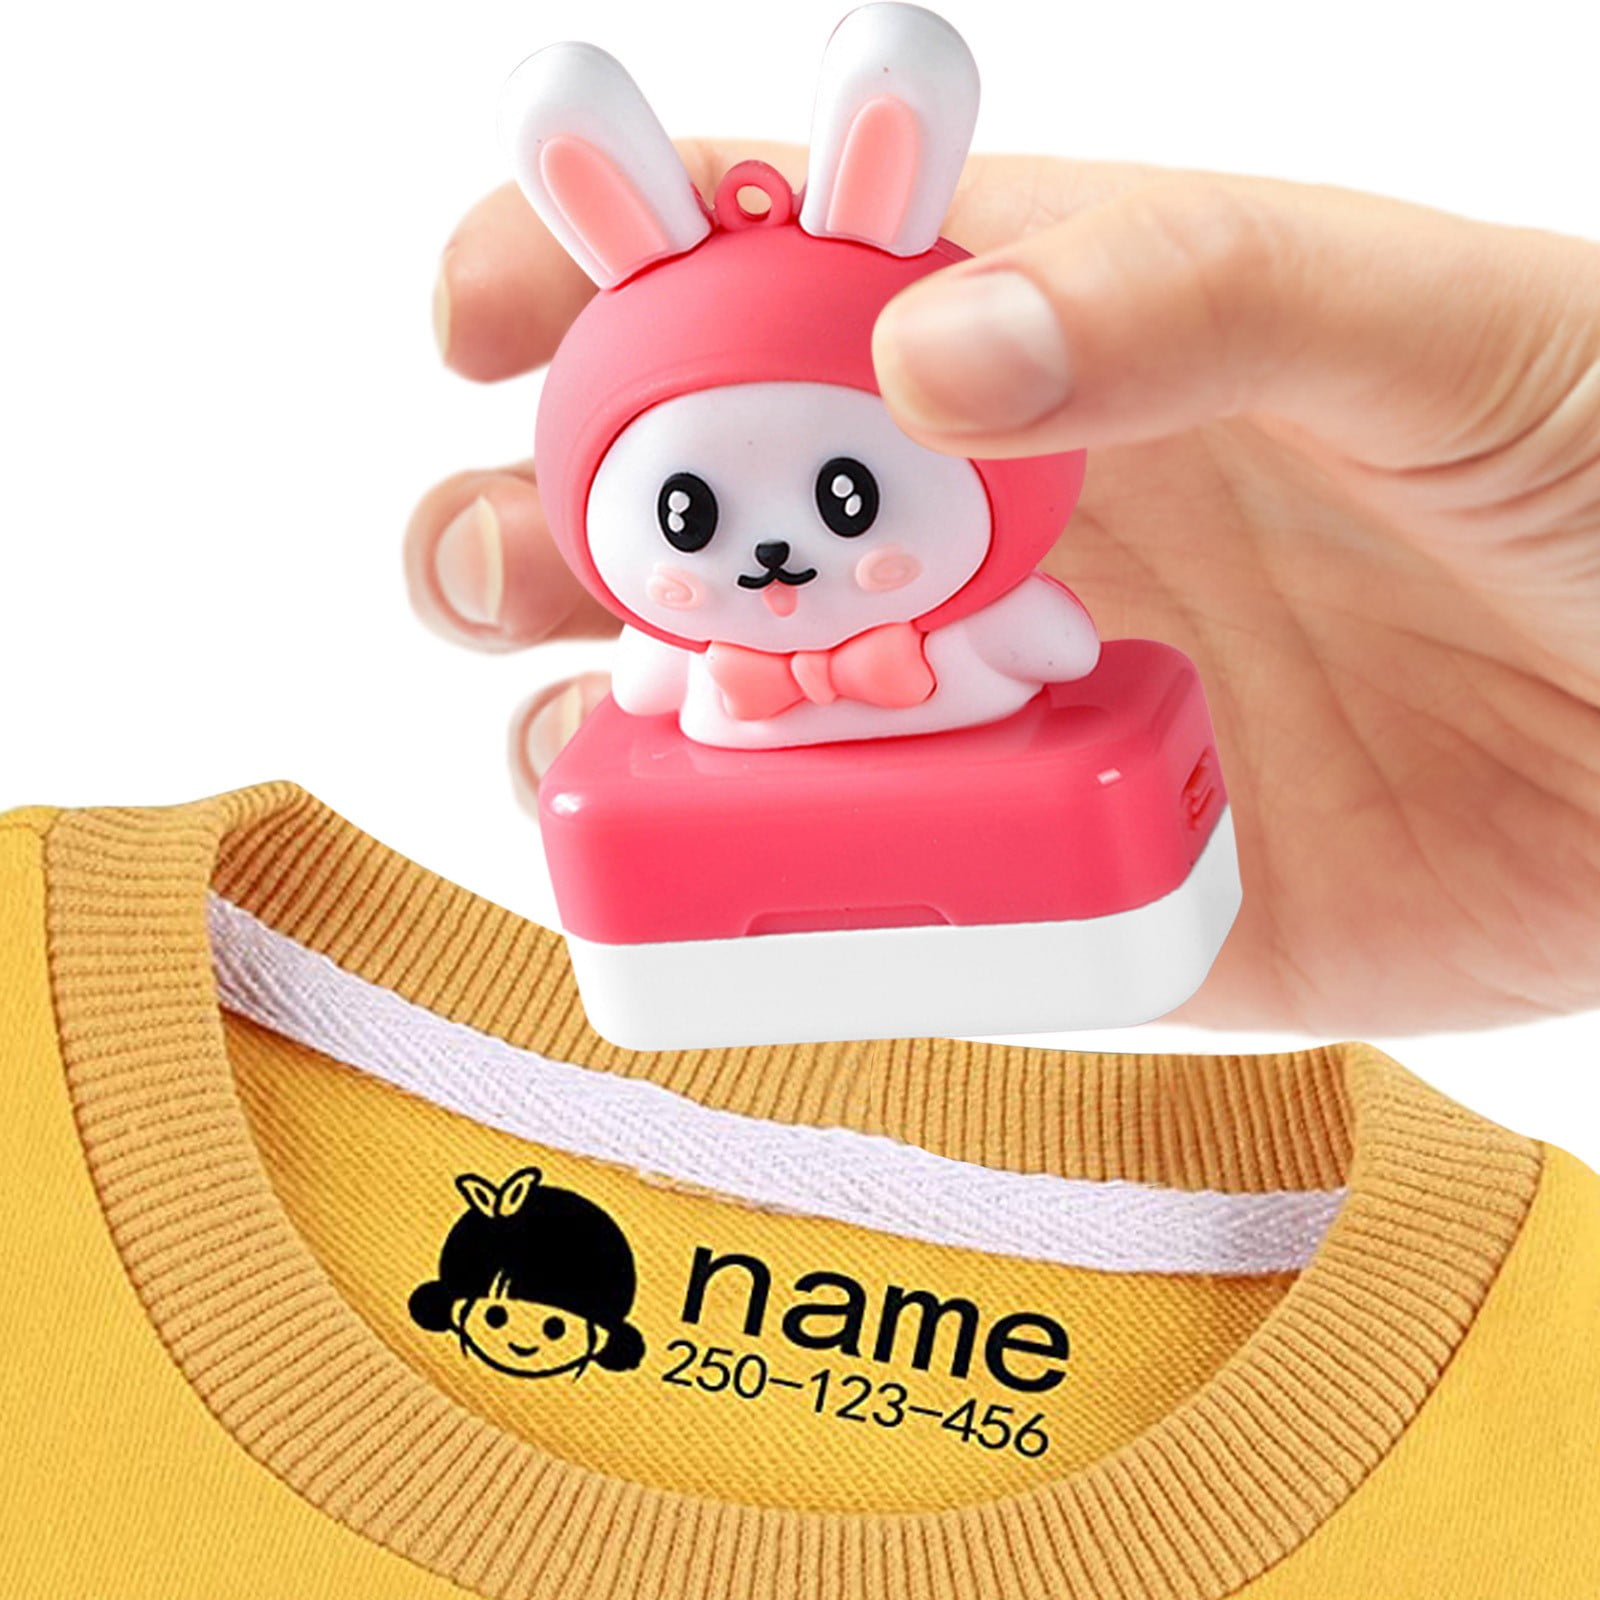 ➤Custom Clothing Name Stamp for kids